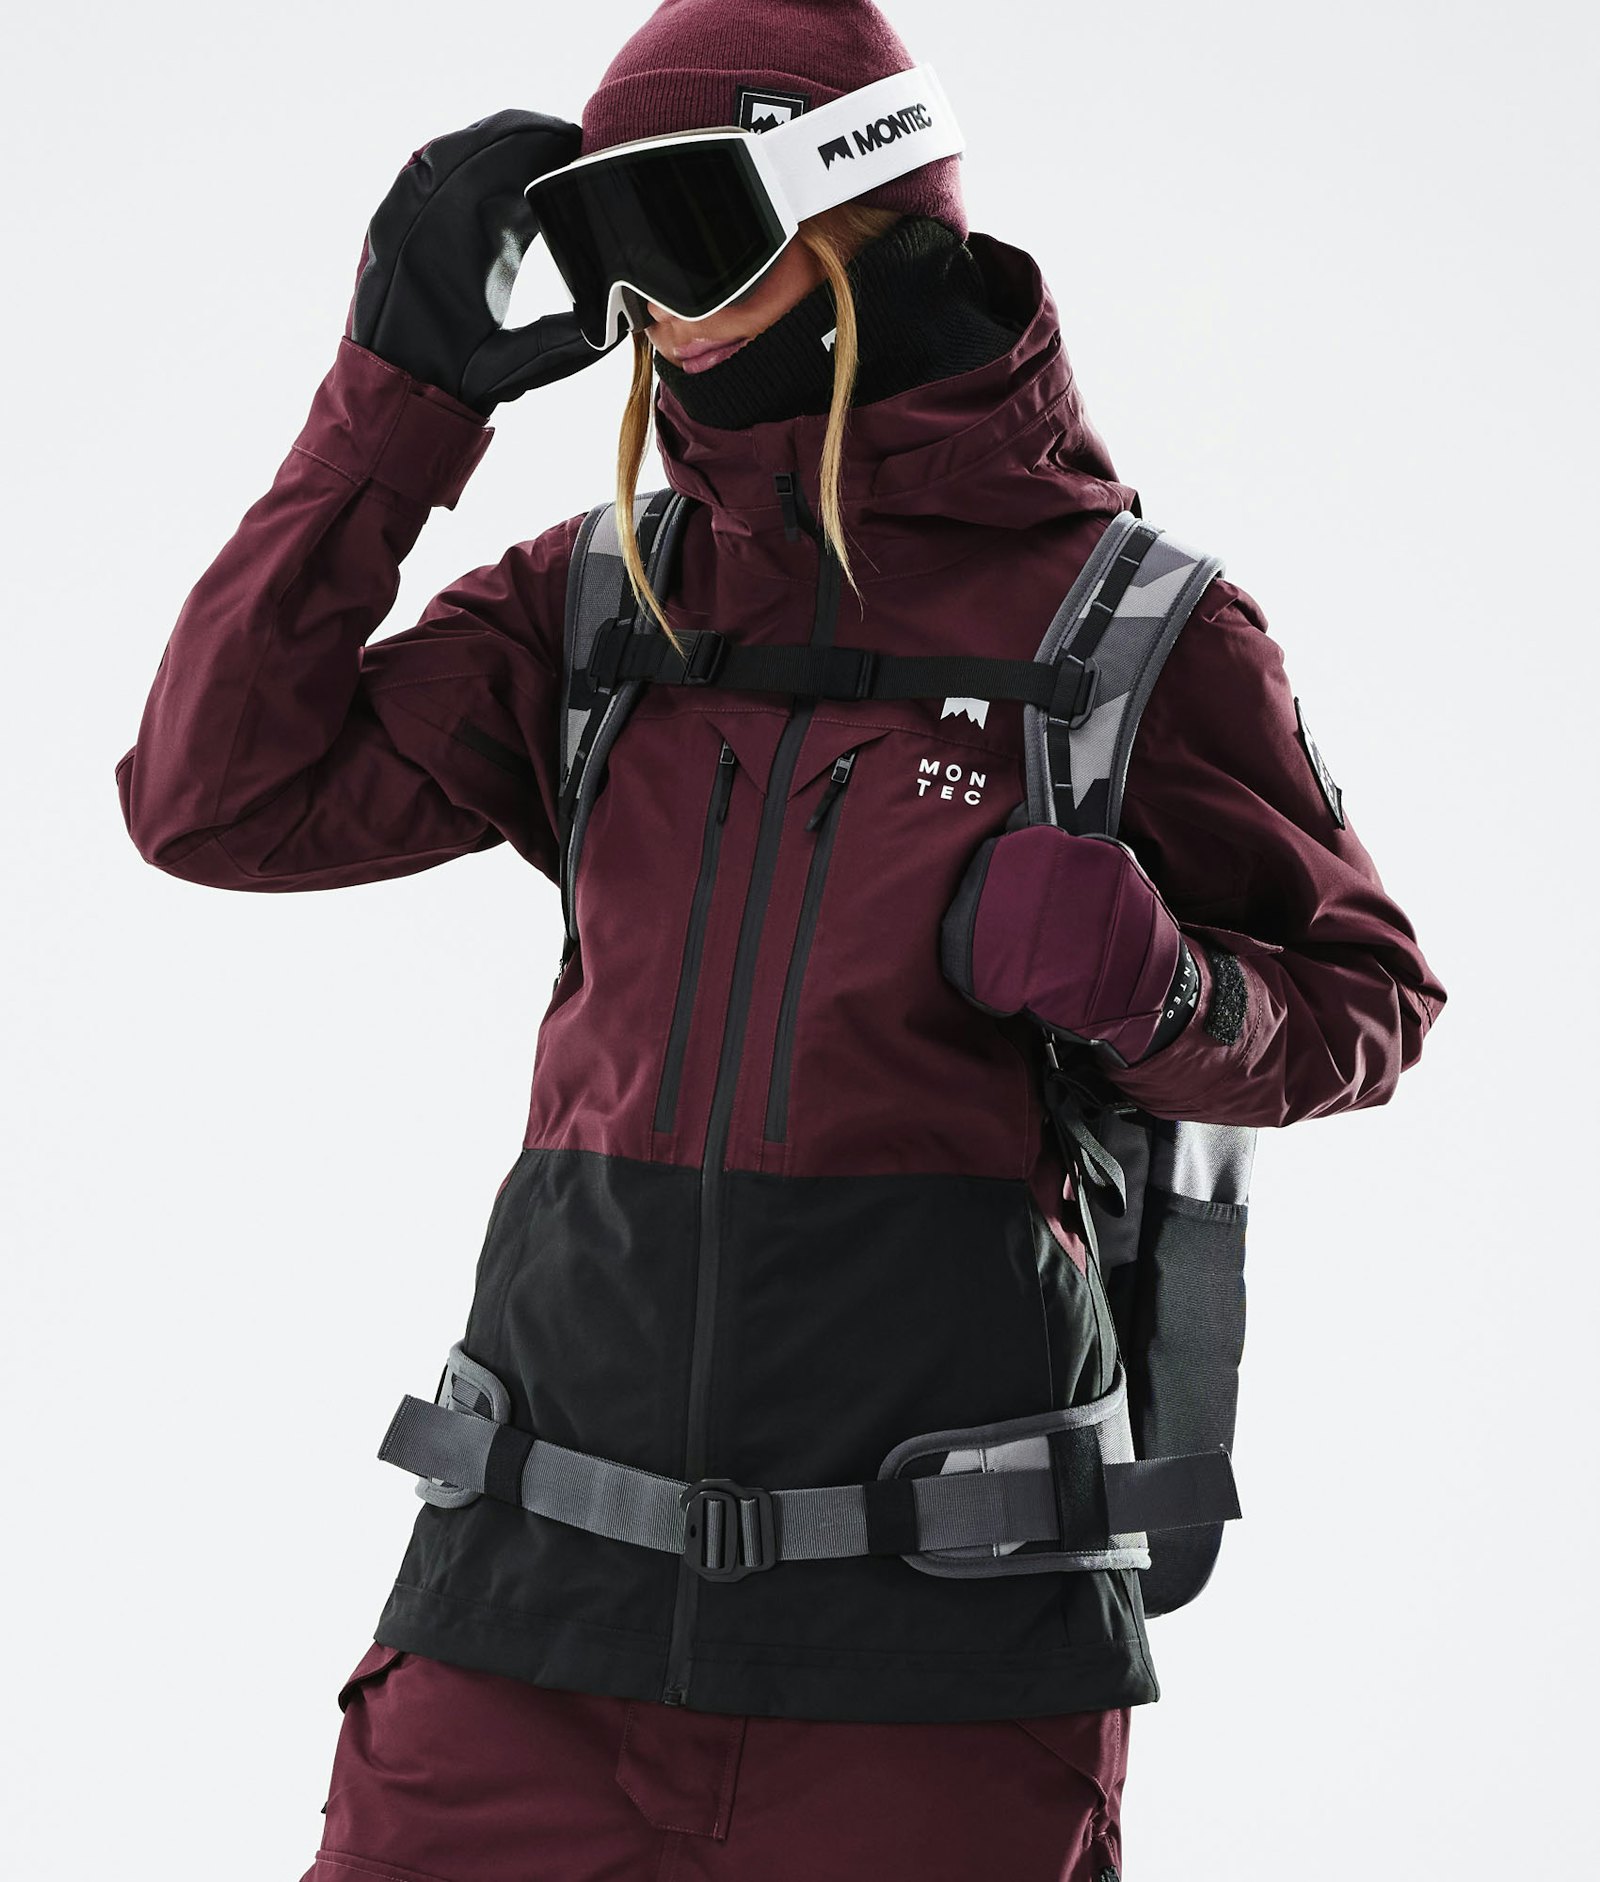 Montec Moss W 2021 Snowboard Jacket Women Burgundy/Black